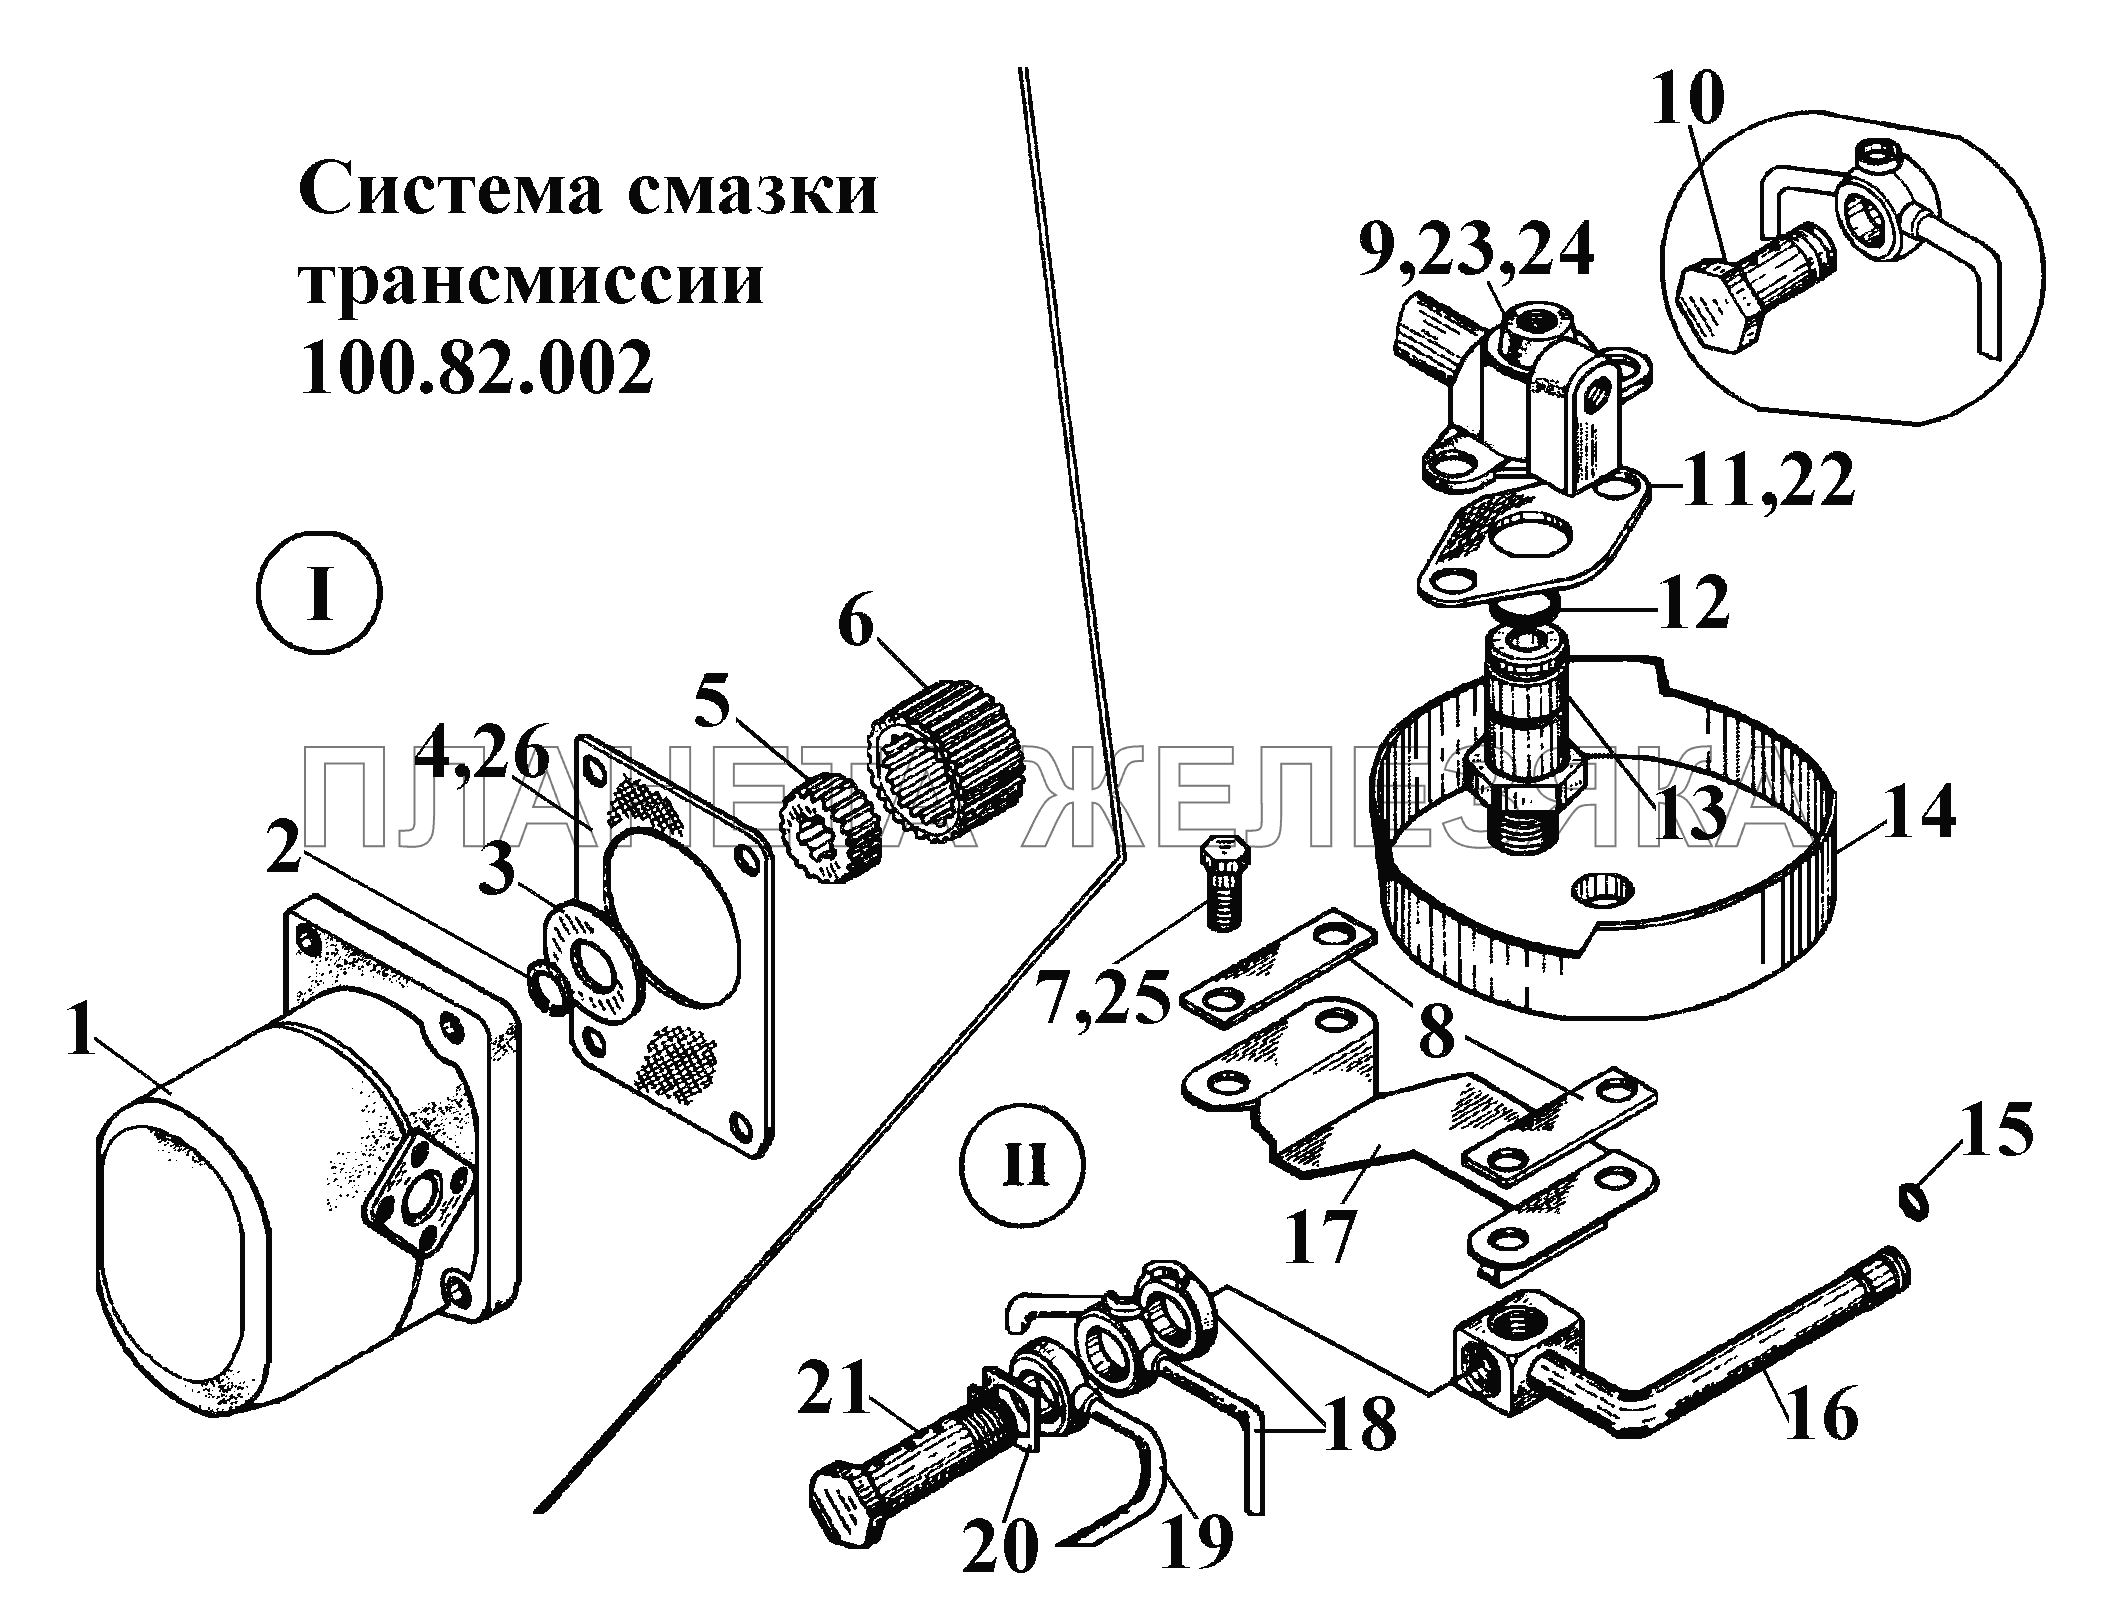 Система смазки трансмиссии 100.82.002 (2) ВТ-100Д